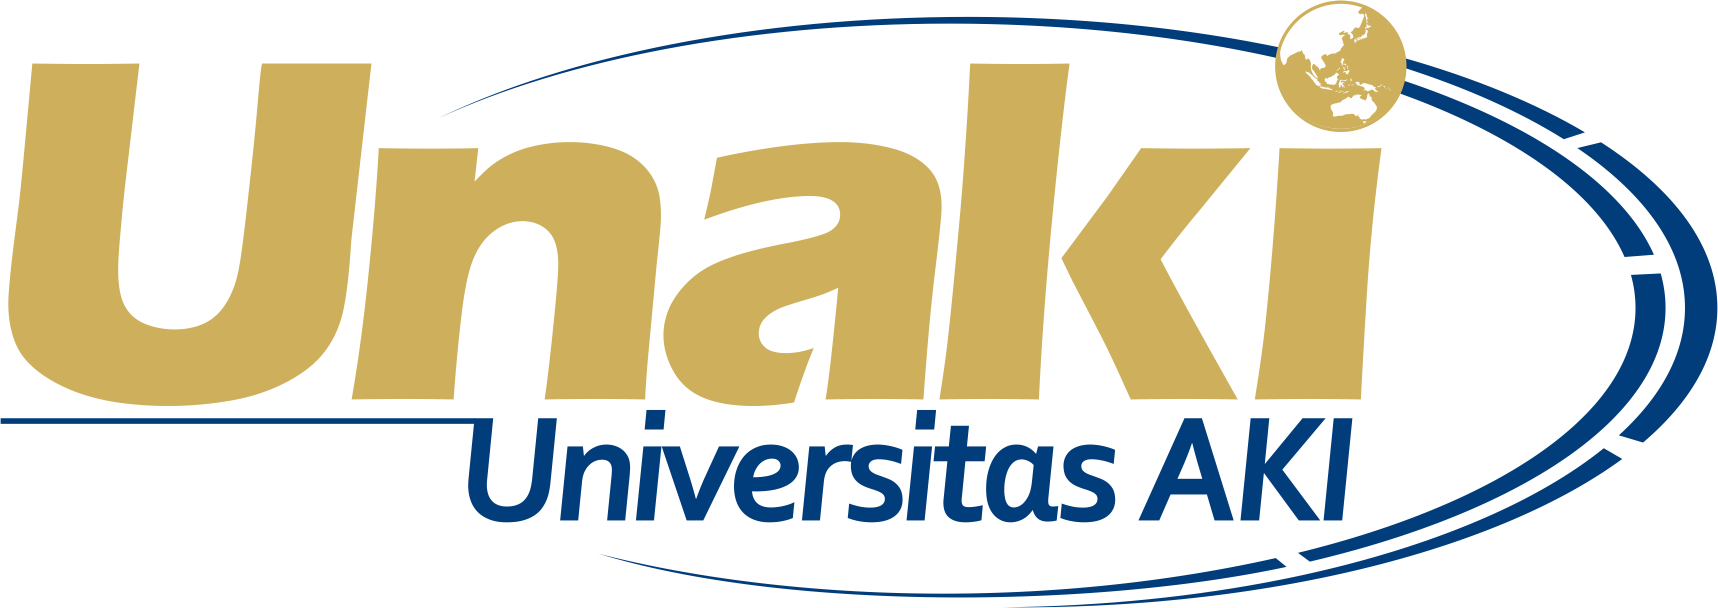 Logo_Univeristas_AKI.png